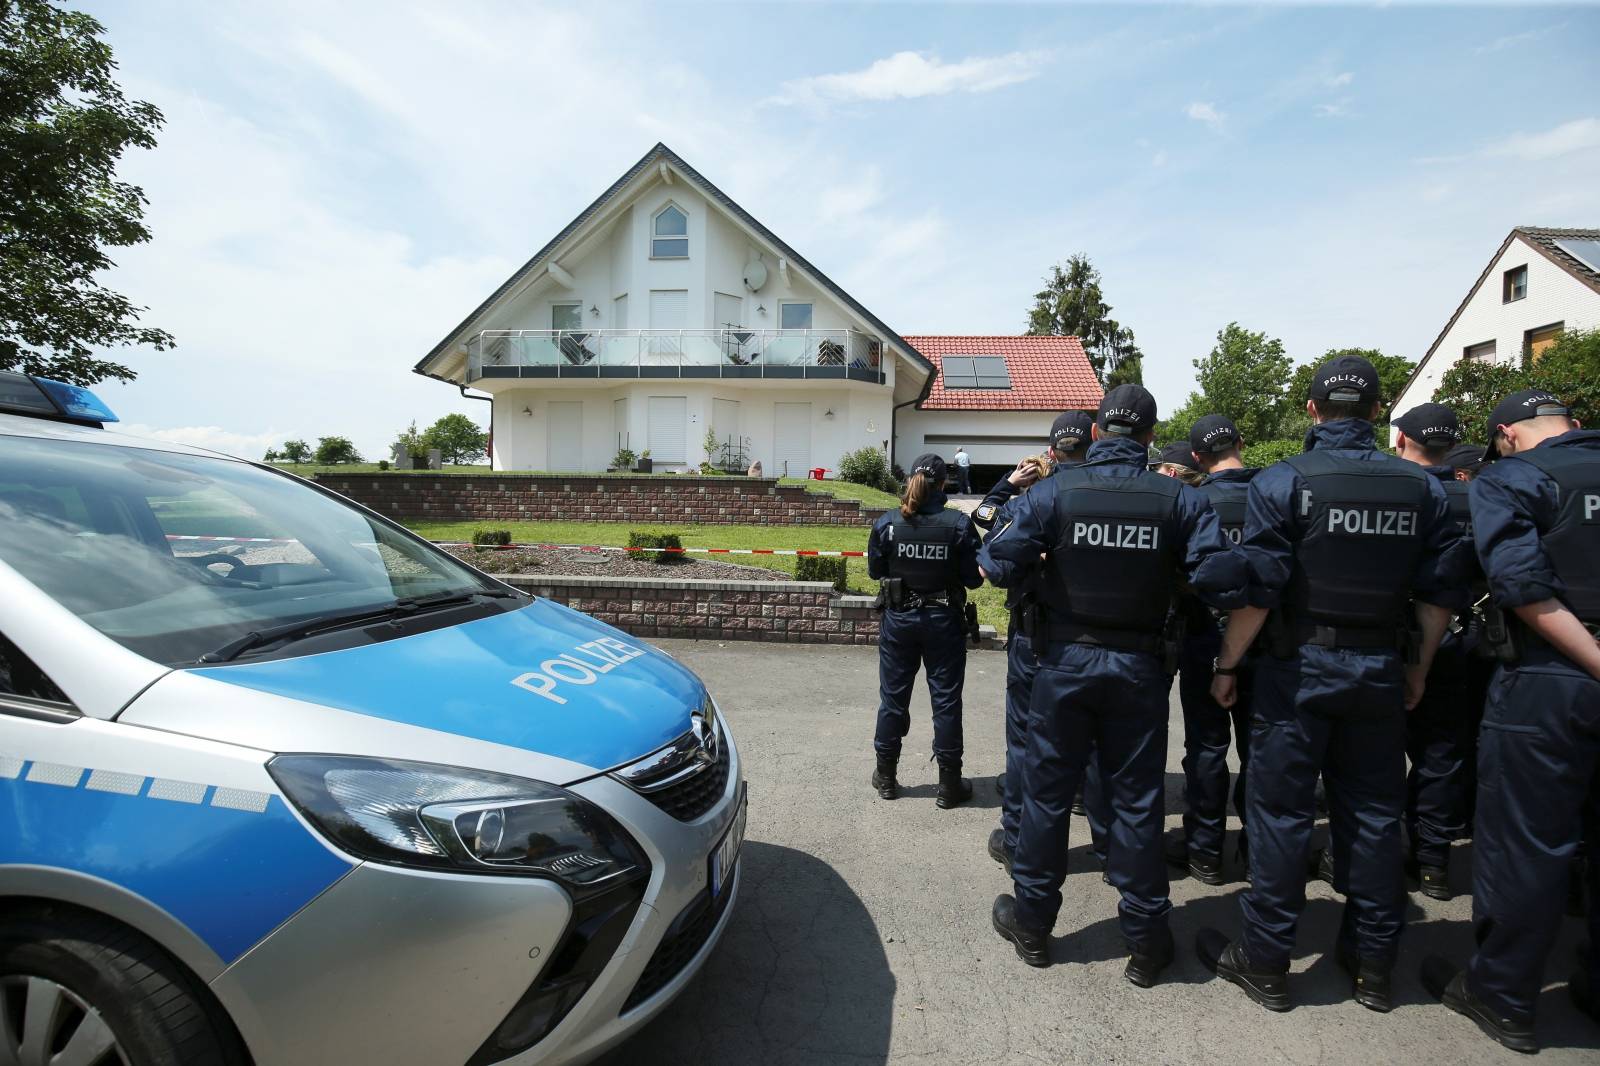 District President of Kassel Walter Luebcke, found dead in Wolfhagen-Istha